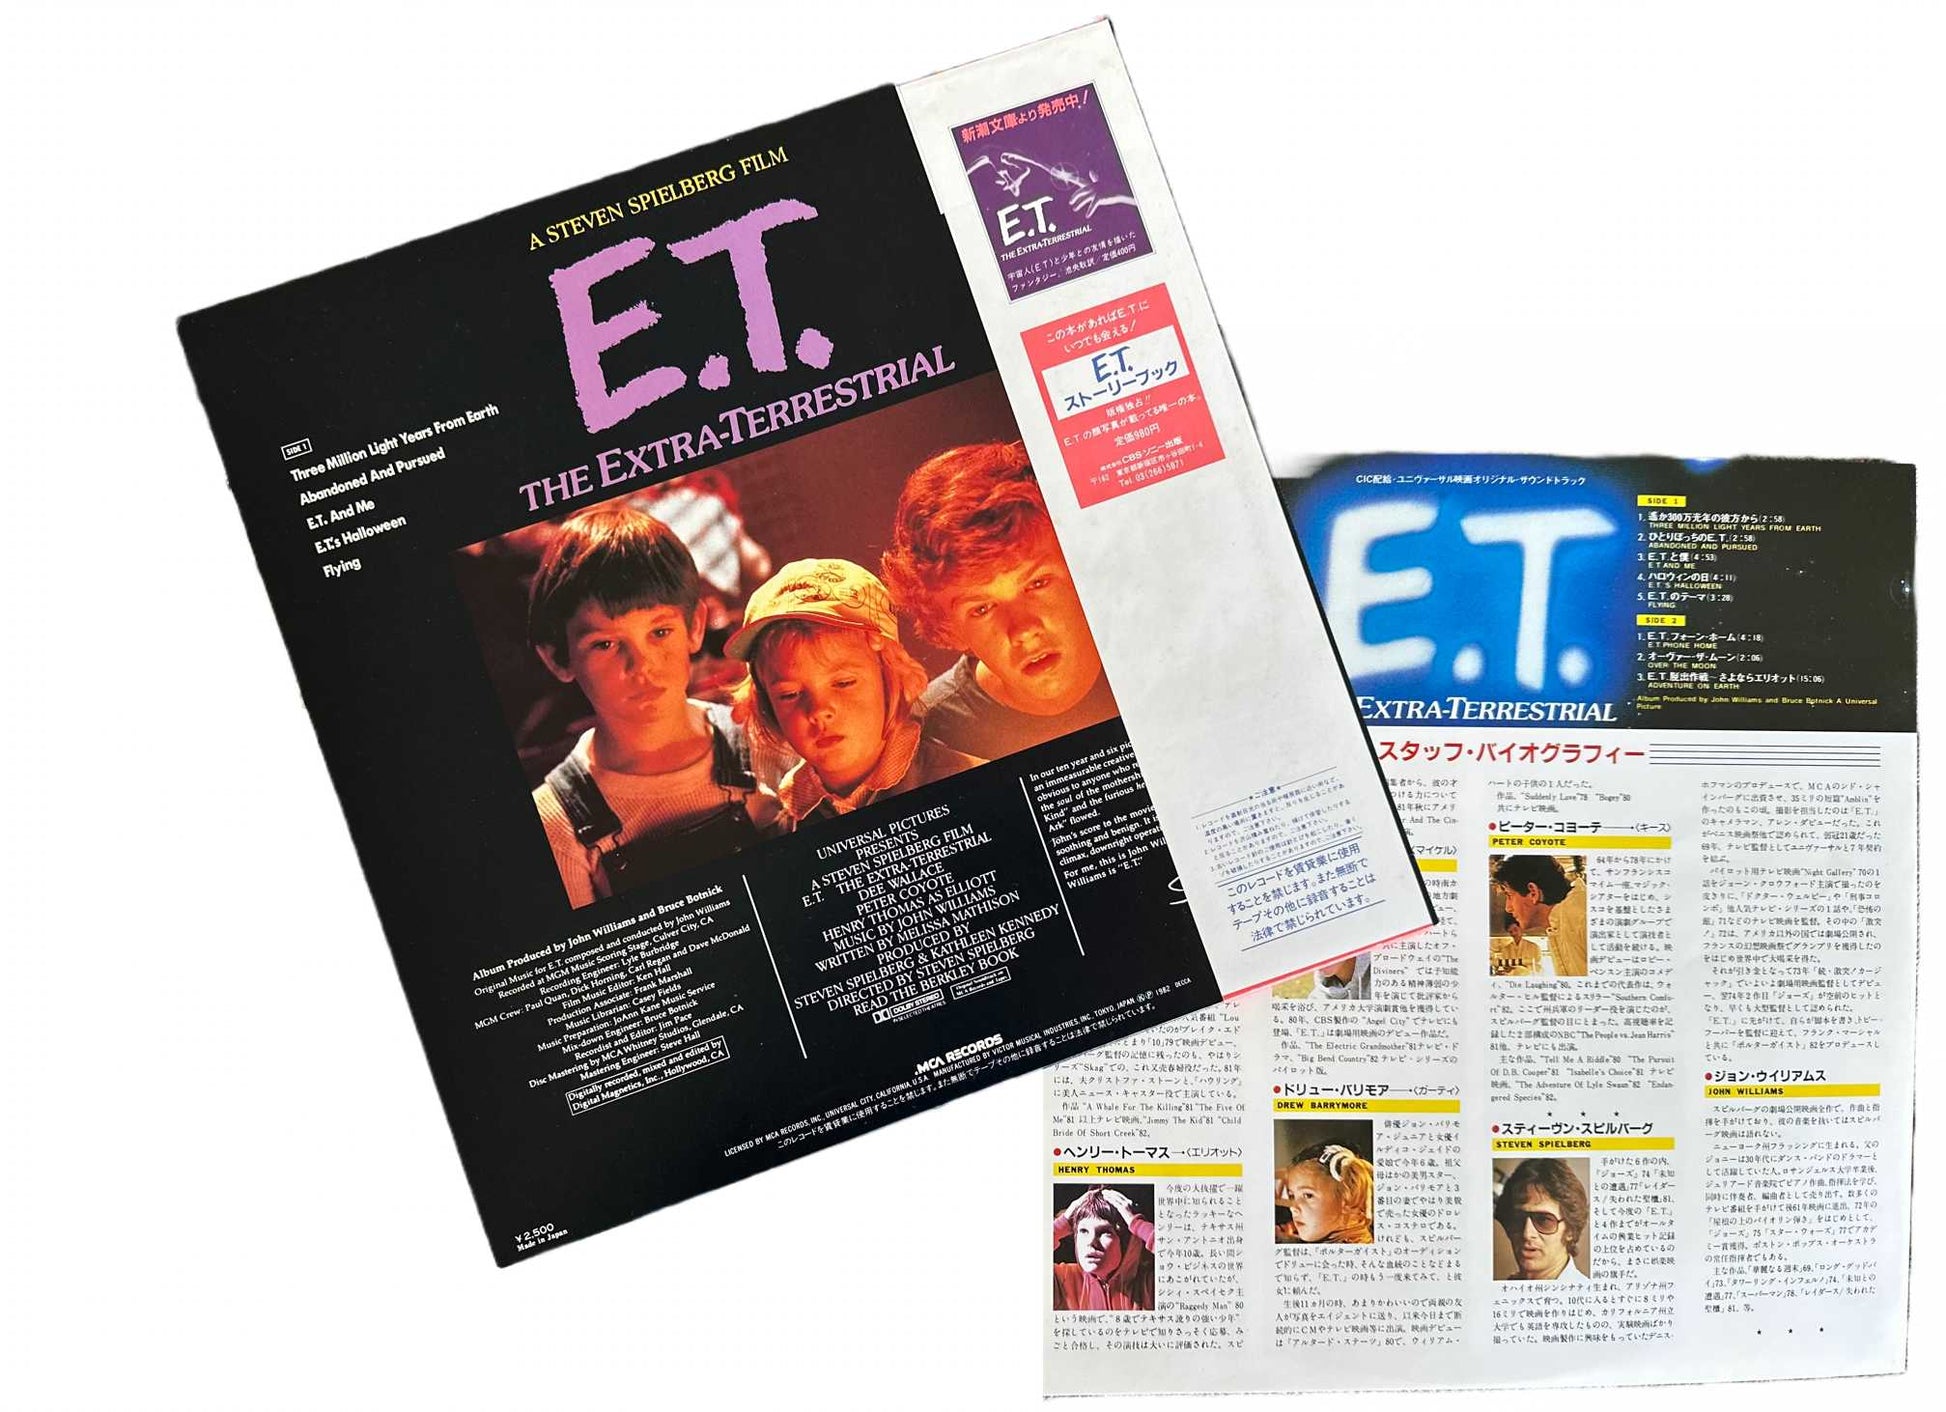 Stevie Wonder - E.T. The Extra-Terrestrial (Music From The Original Motion Picture Soundtrack) [Original Japanese Vinyl LP]